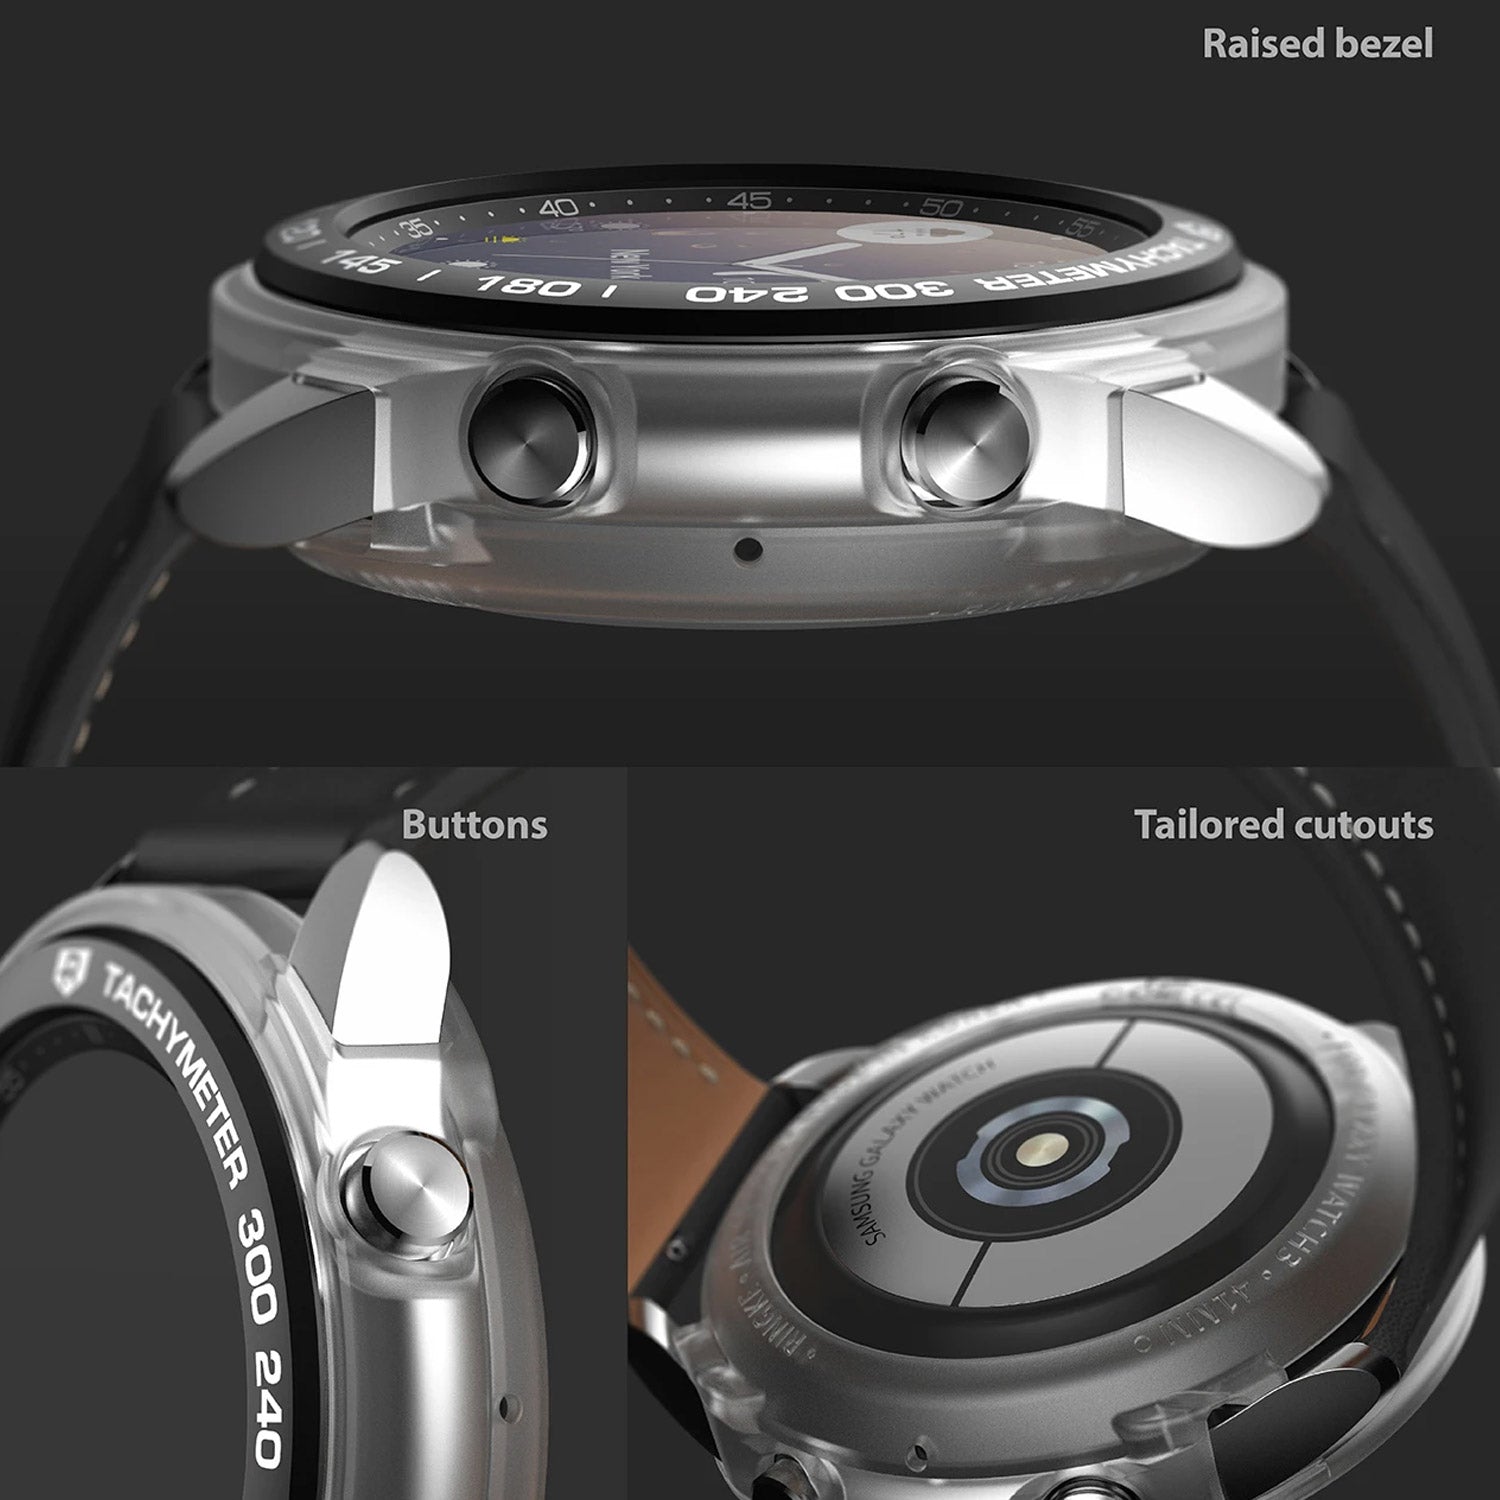 Ringke Galaxy Watch 3 41mm Styling 10 Air Sports Matte Clear Case+ Bezel Combo Pack